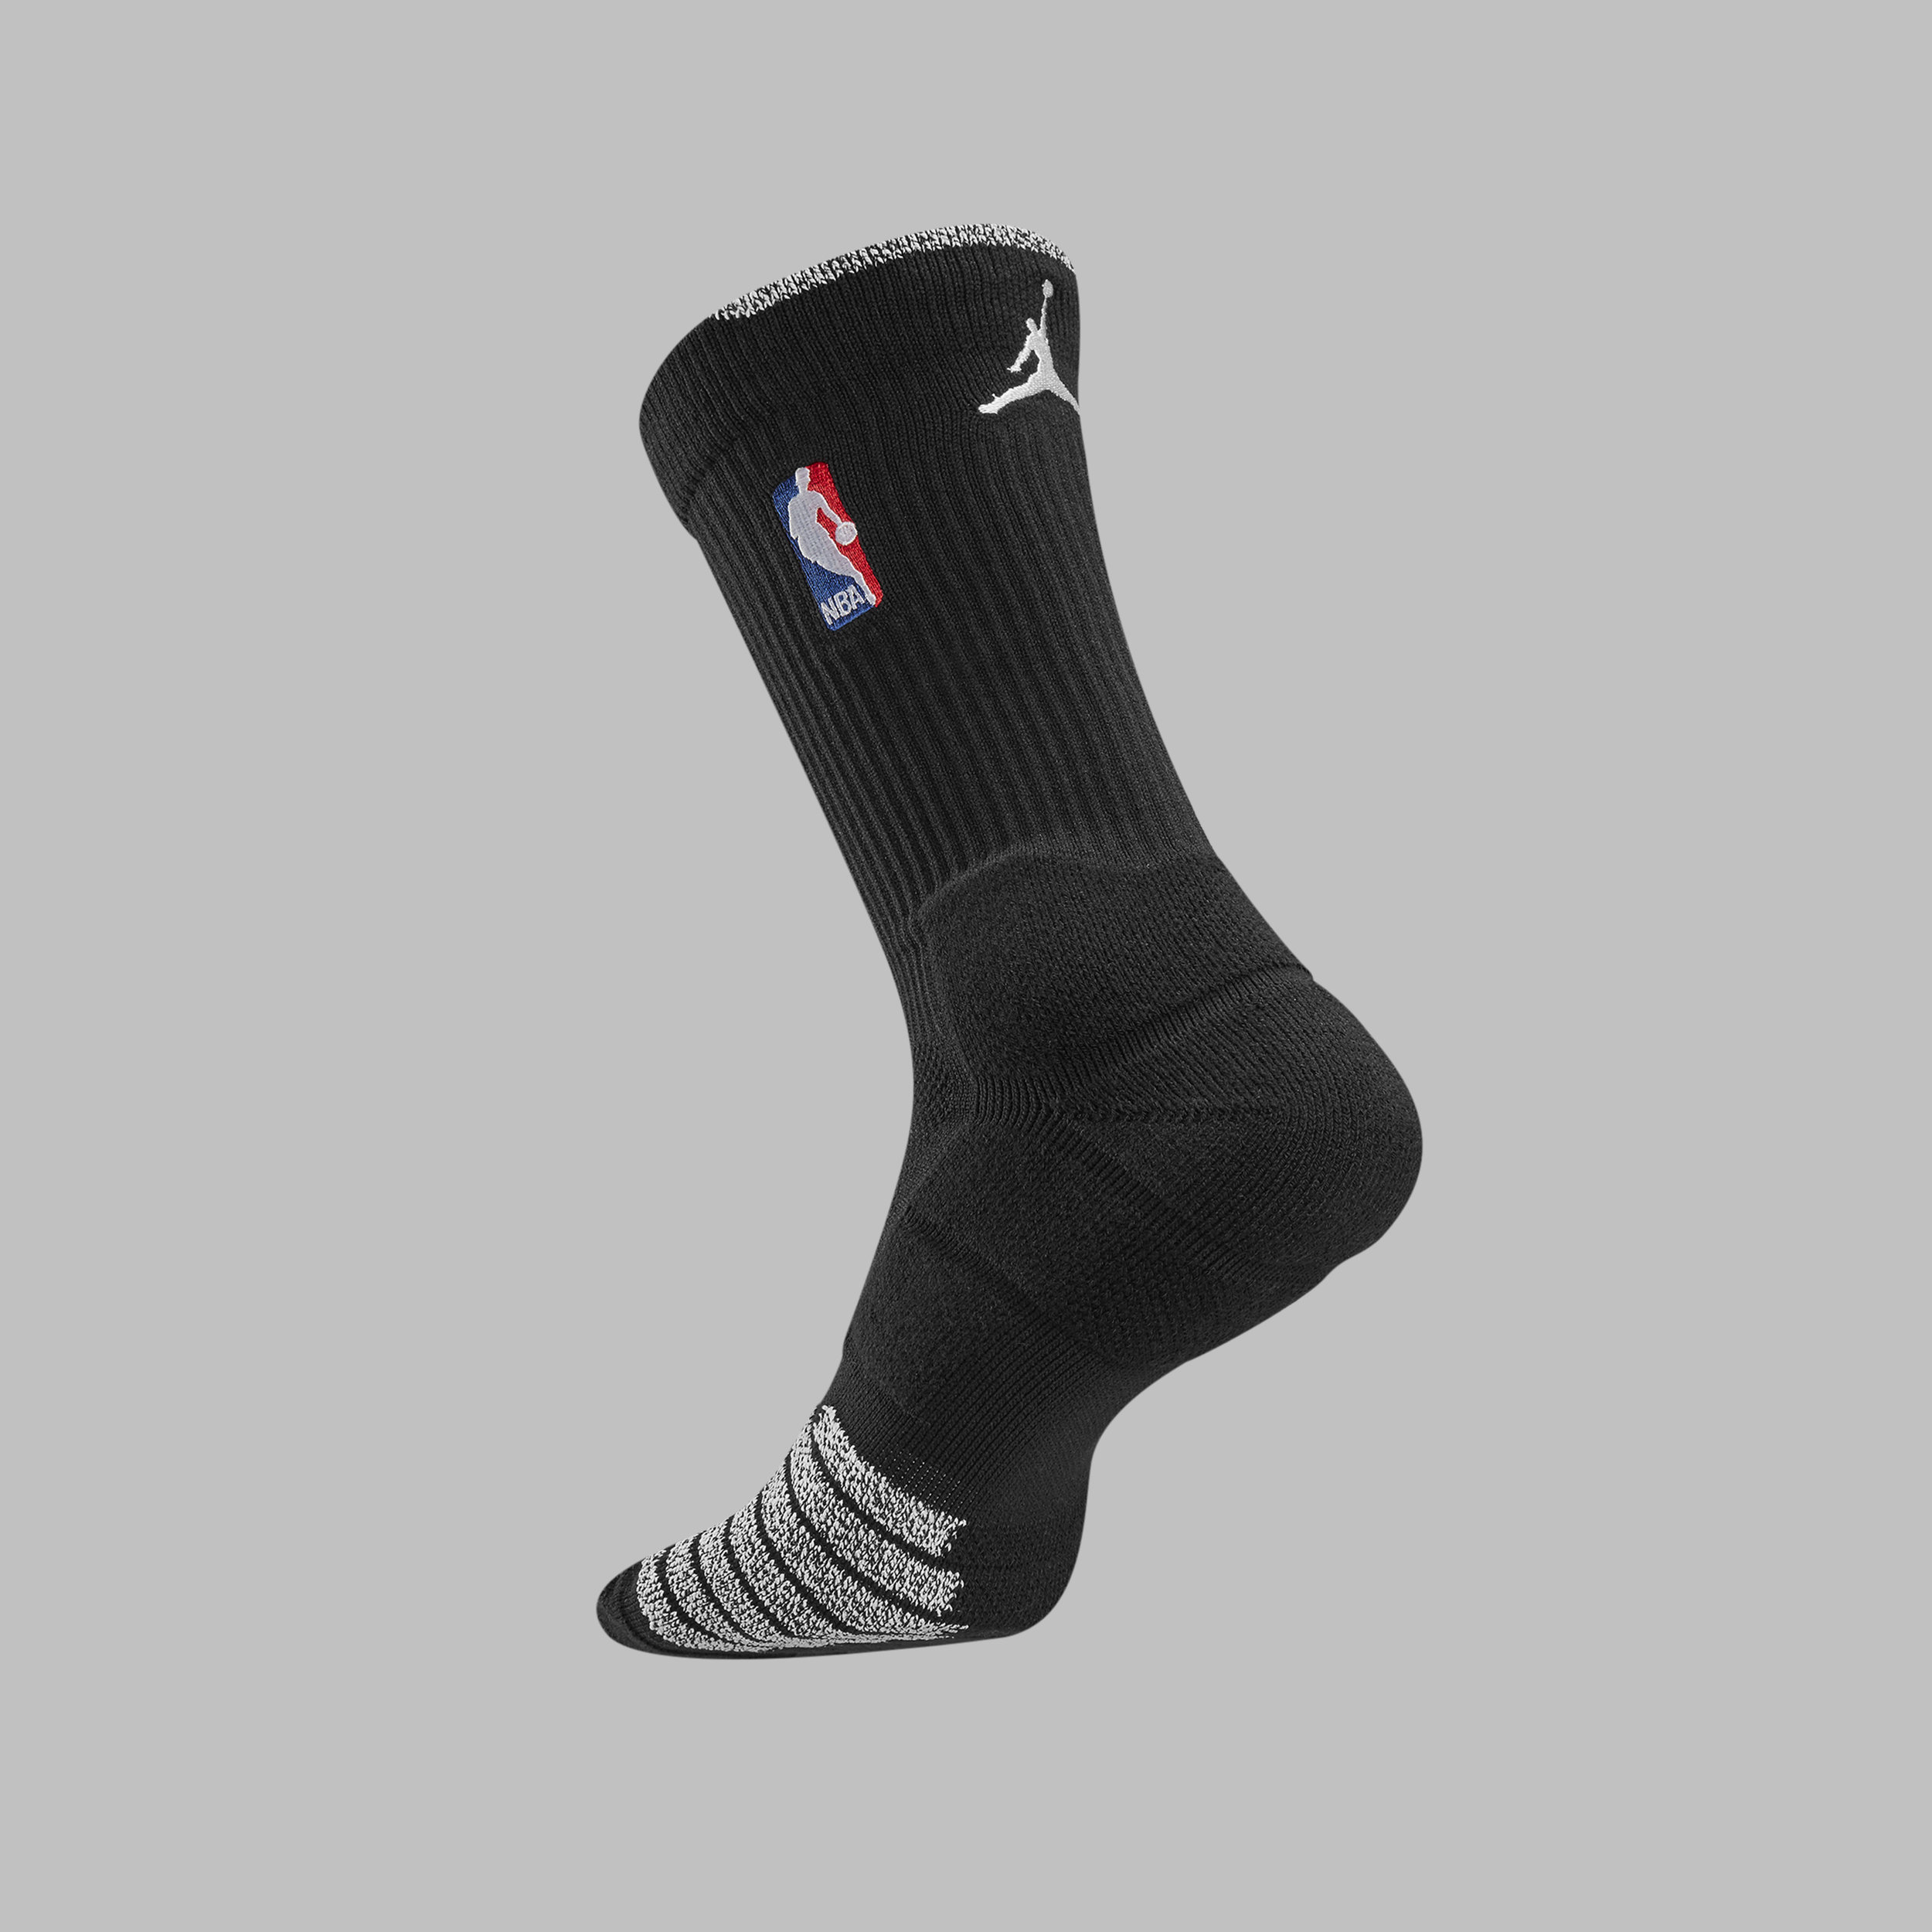 nike grip power crew basketball socks